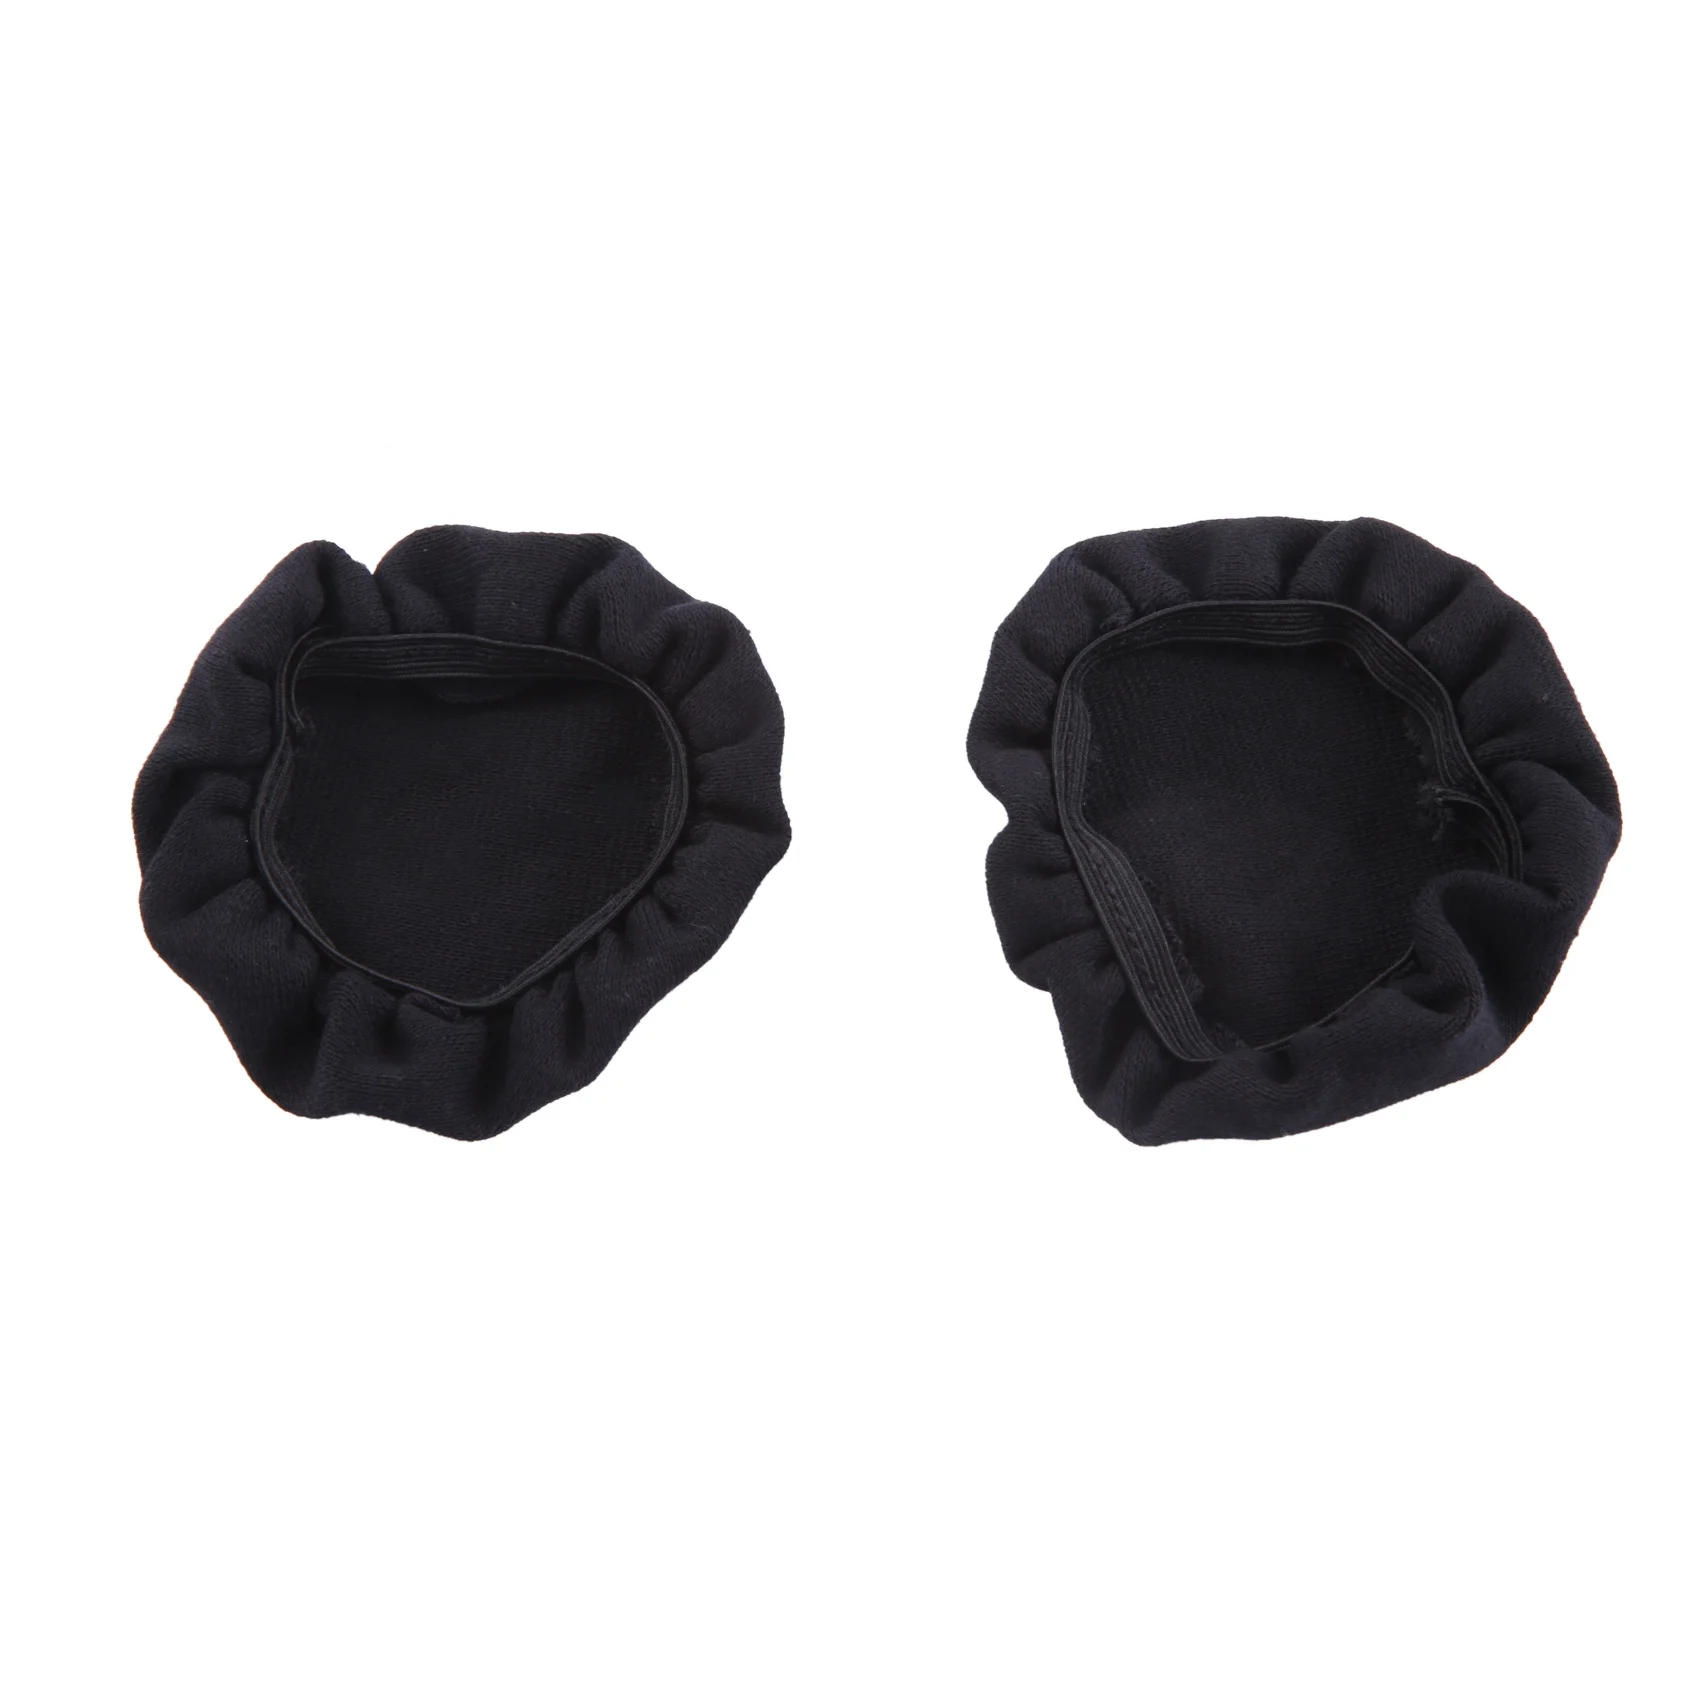 

Flex Fabric Headphone Earpad Covers Sanitary Earcup Protectors Headset Ear Cushions for Gym Training